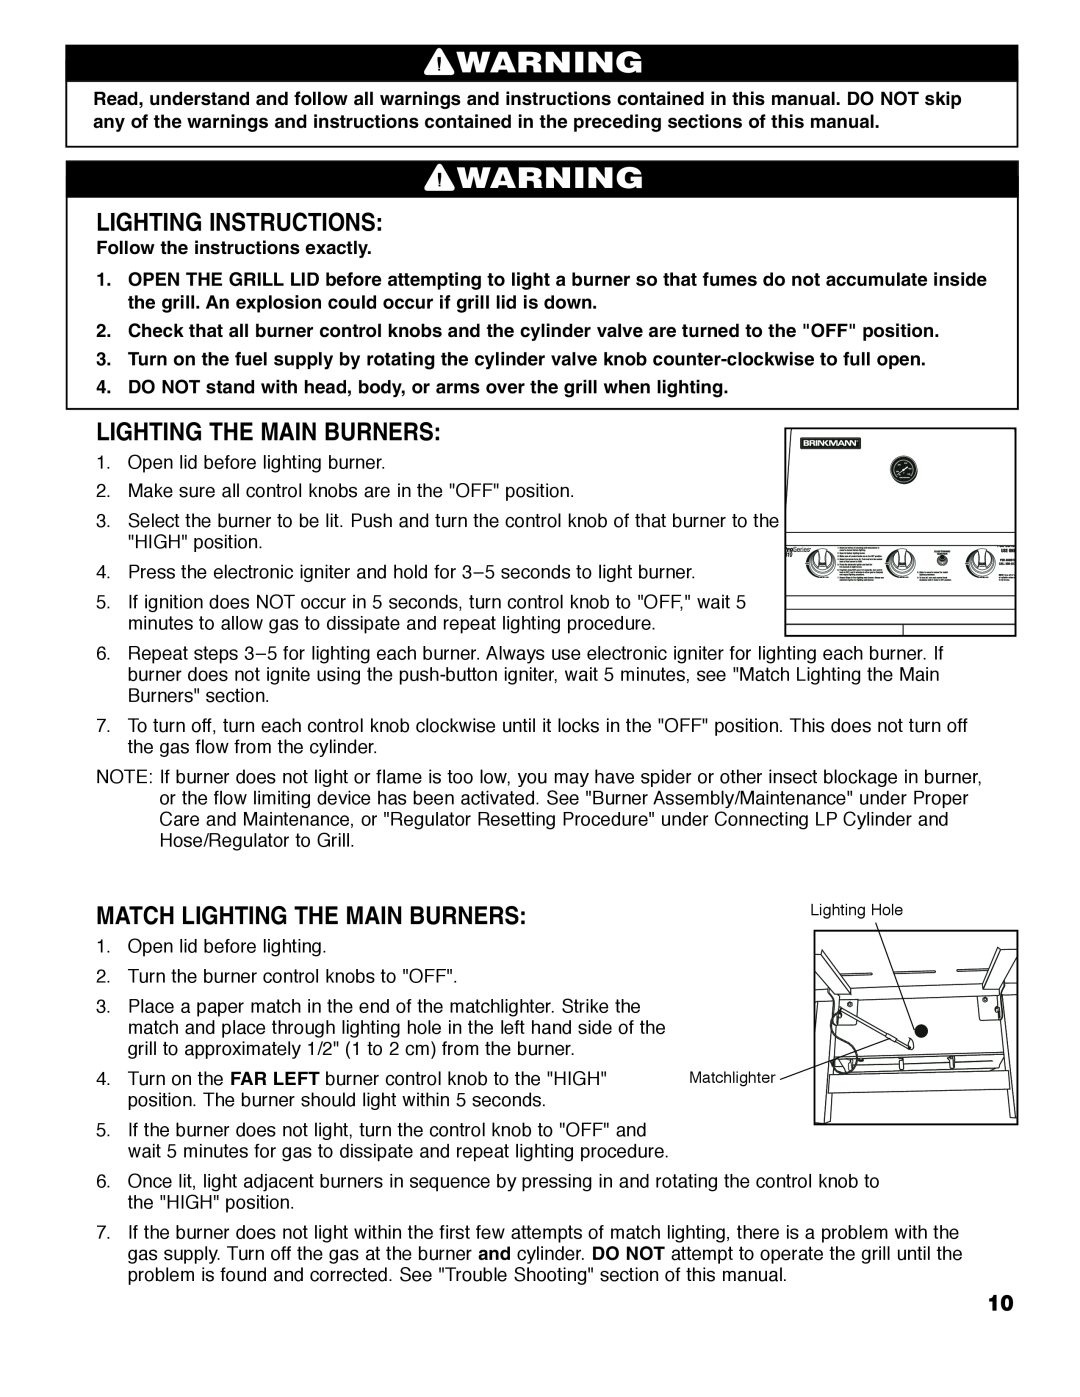 Brinkmann ProSeries 2310 owner manual Lighting Instructions, Match Lighting The Main Burners 